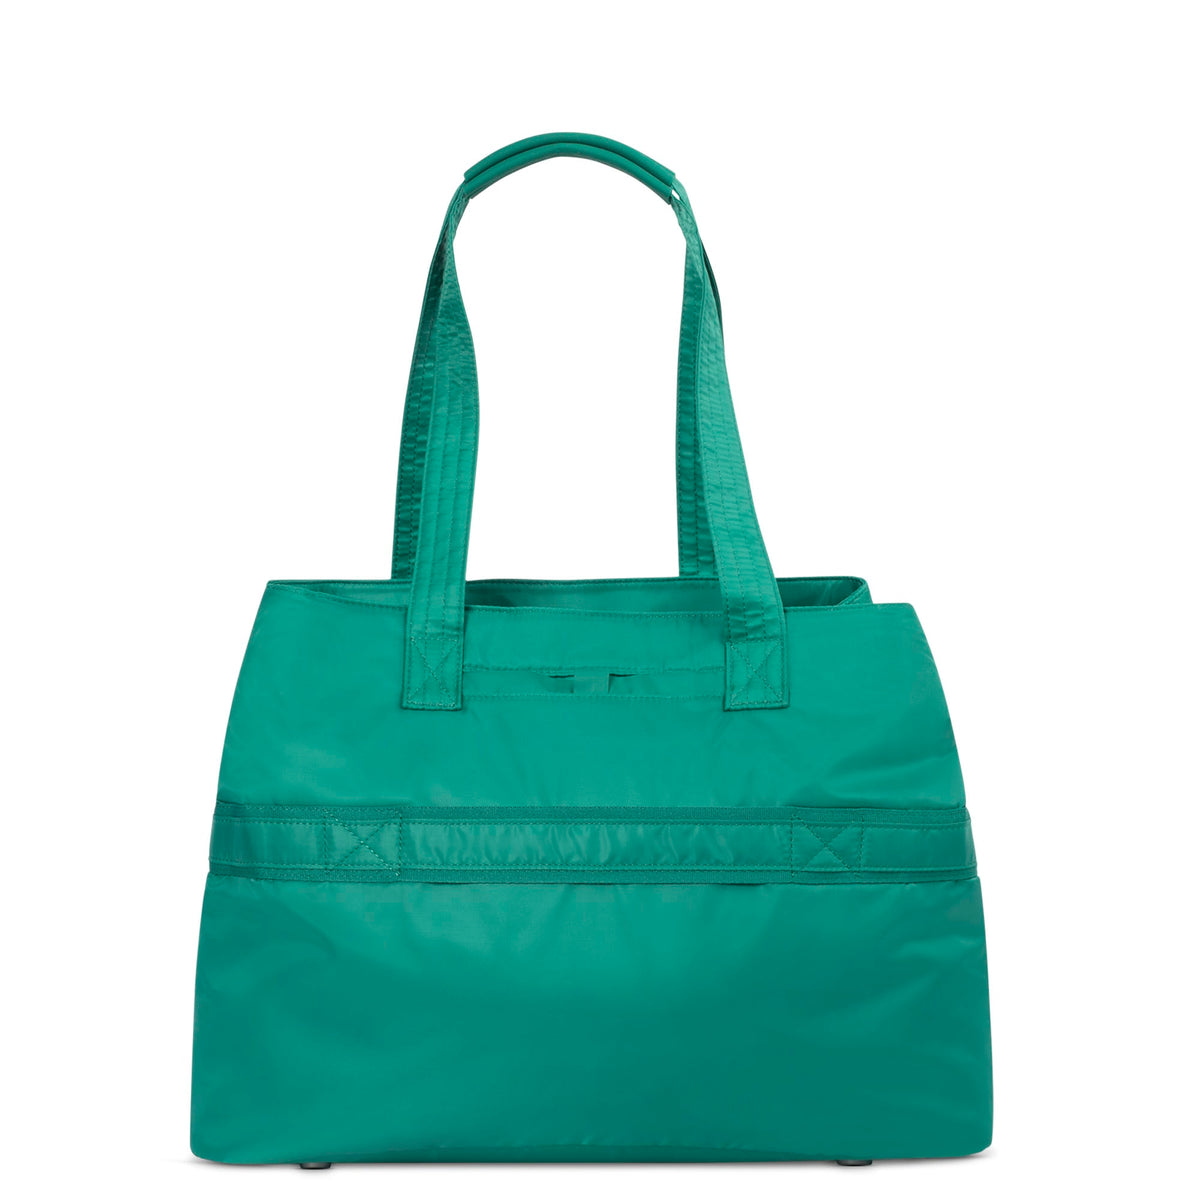 Polyester Portfolio Bag, Polyester Carrying Bag